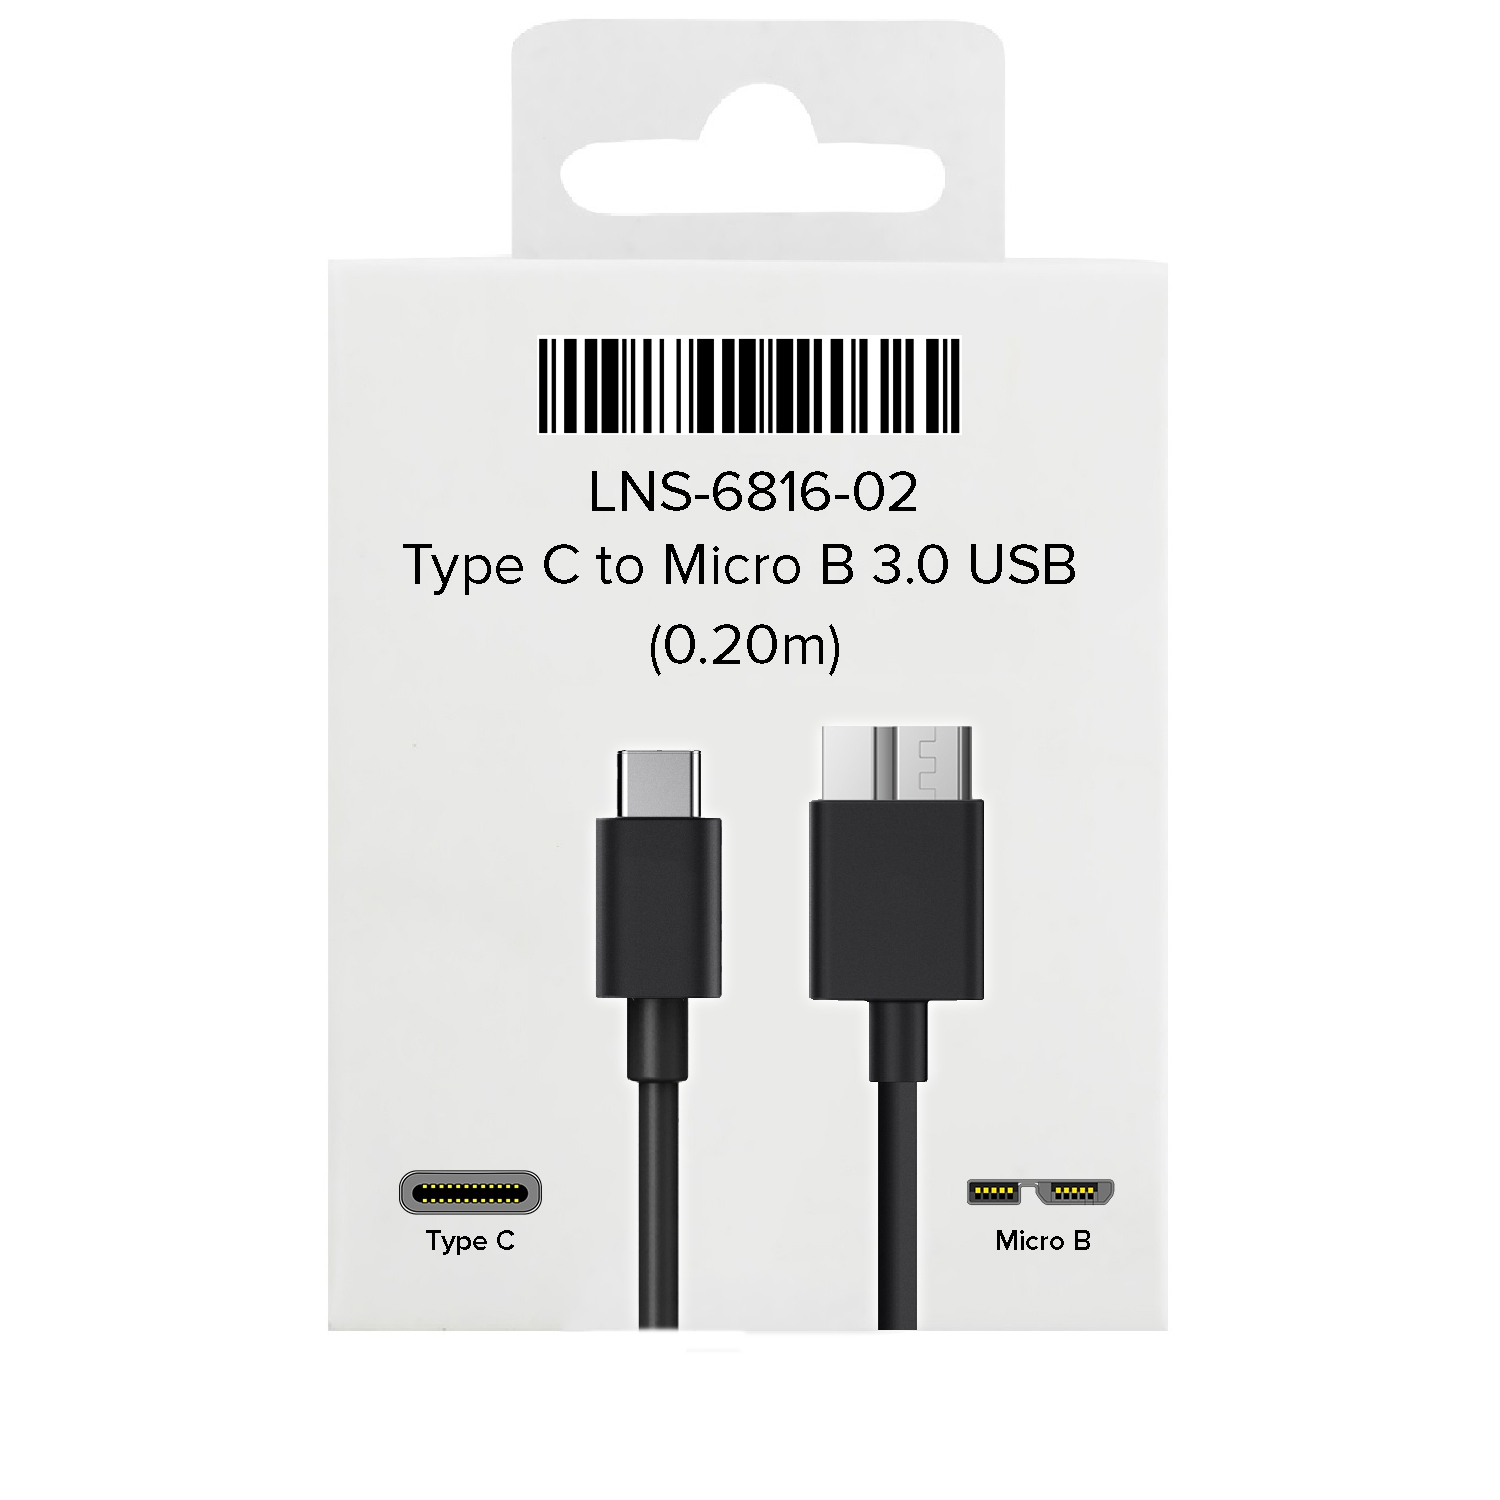 Type C to Micro B 3.0 USB 0.20M